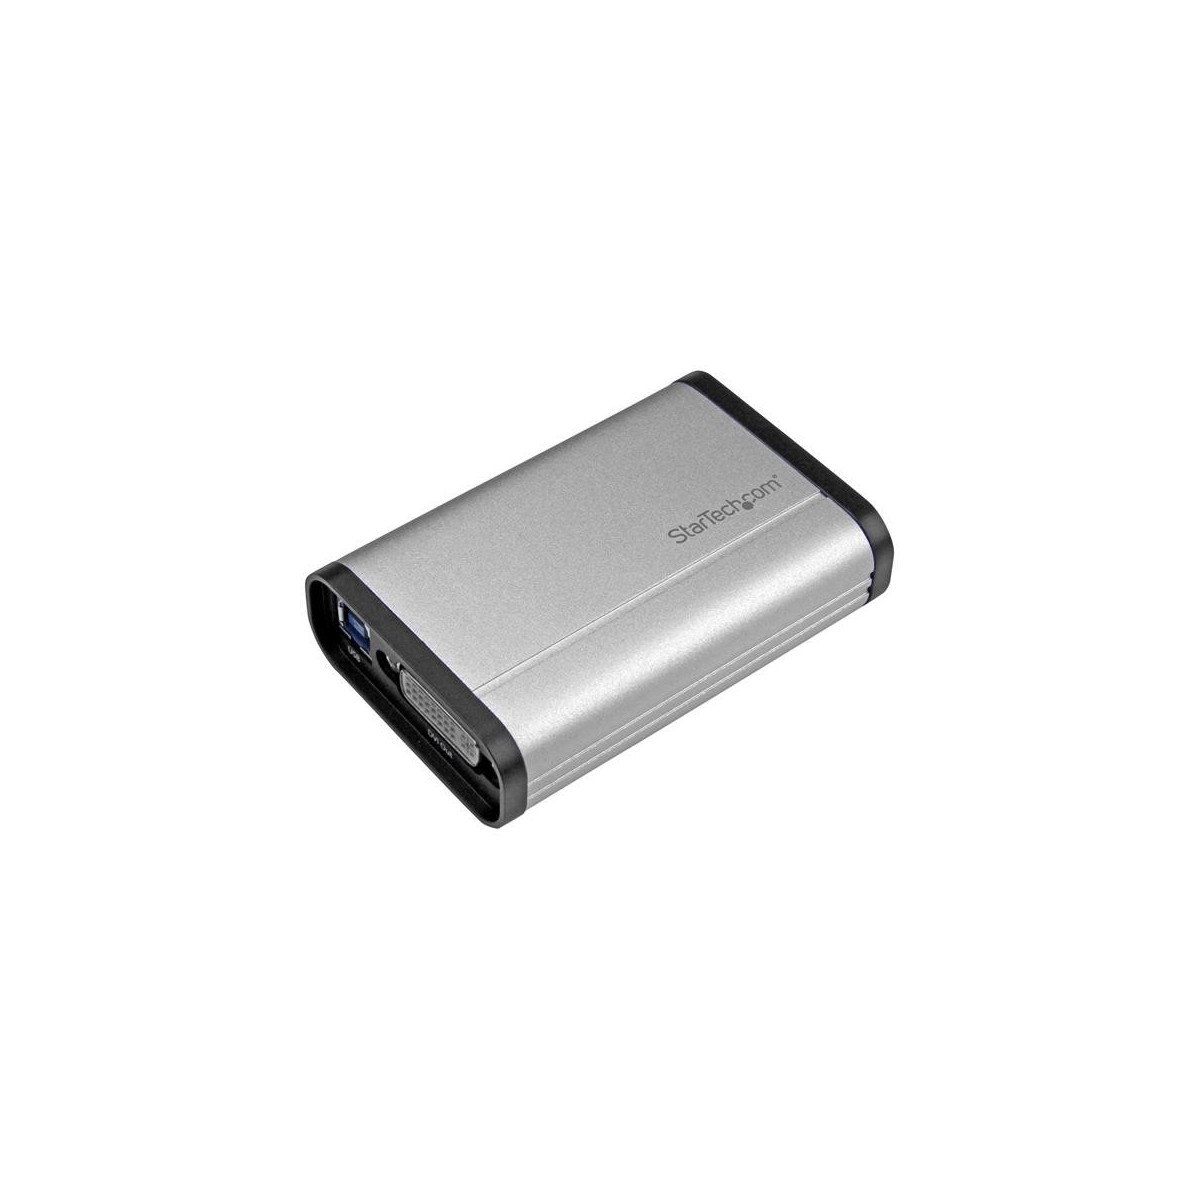 StarTech.com USB 3.0 Capture Device for High-Performance DVI Video - 1080p 60fps - Aluminum - NTSC,PAL 60,PAL M - 1920 x 1080 - 